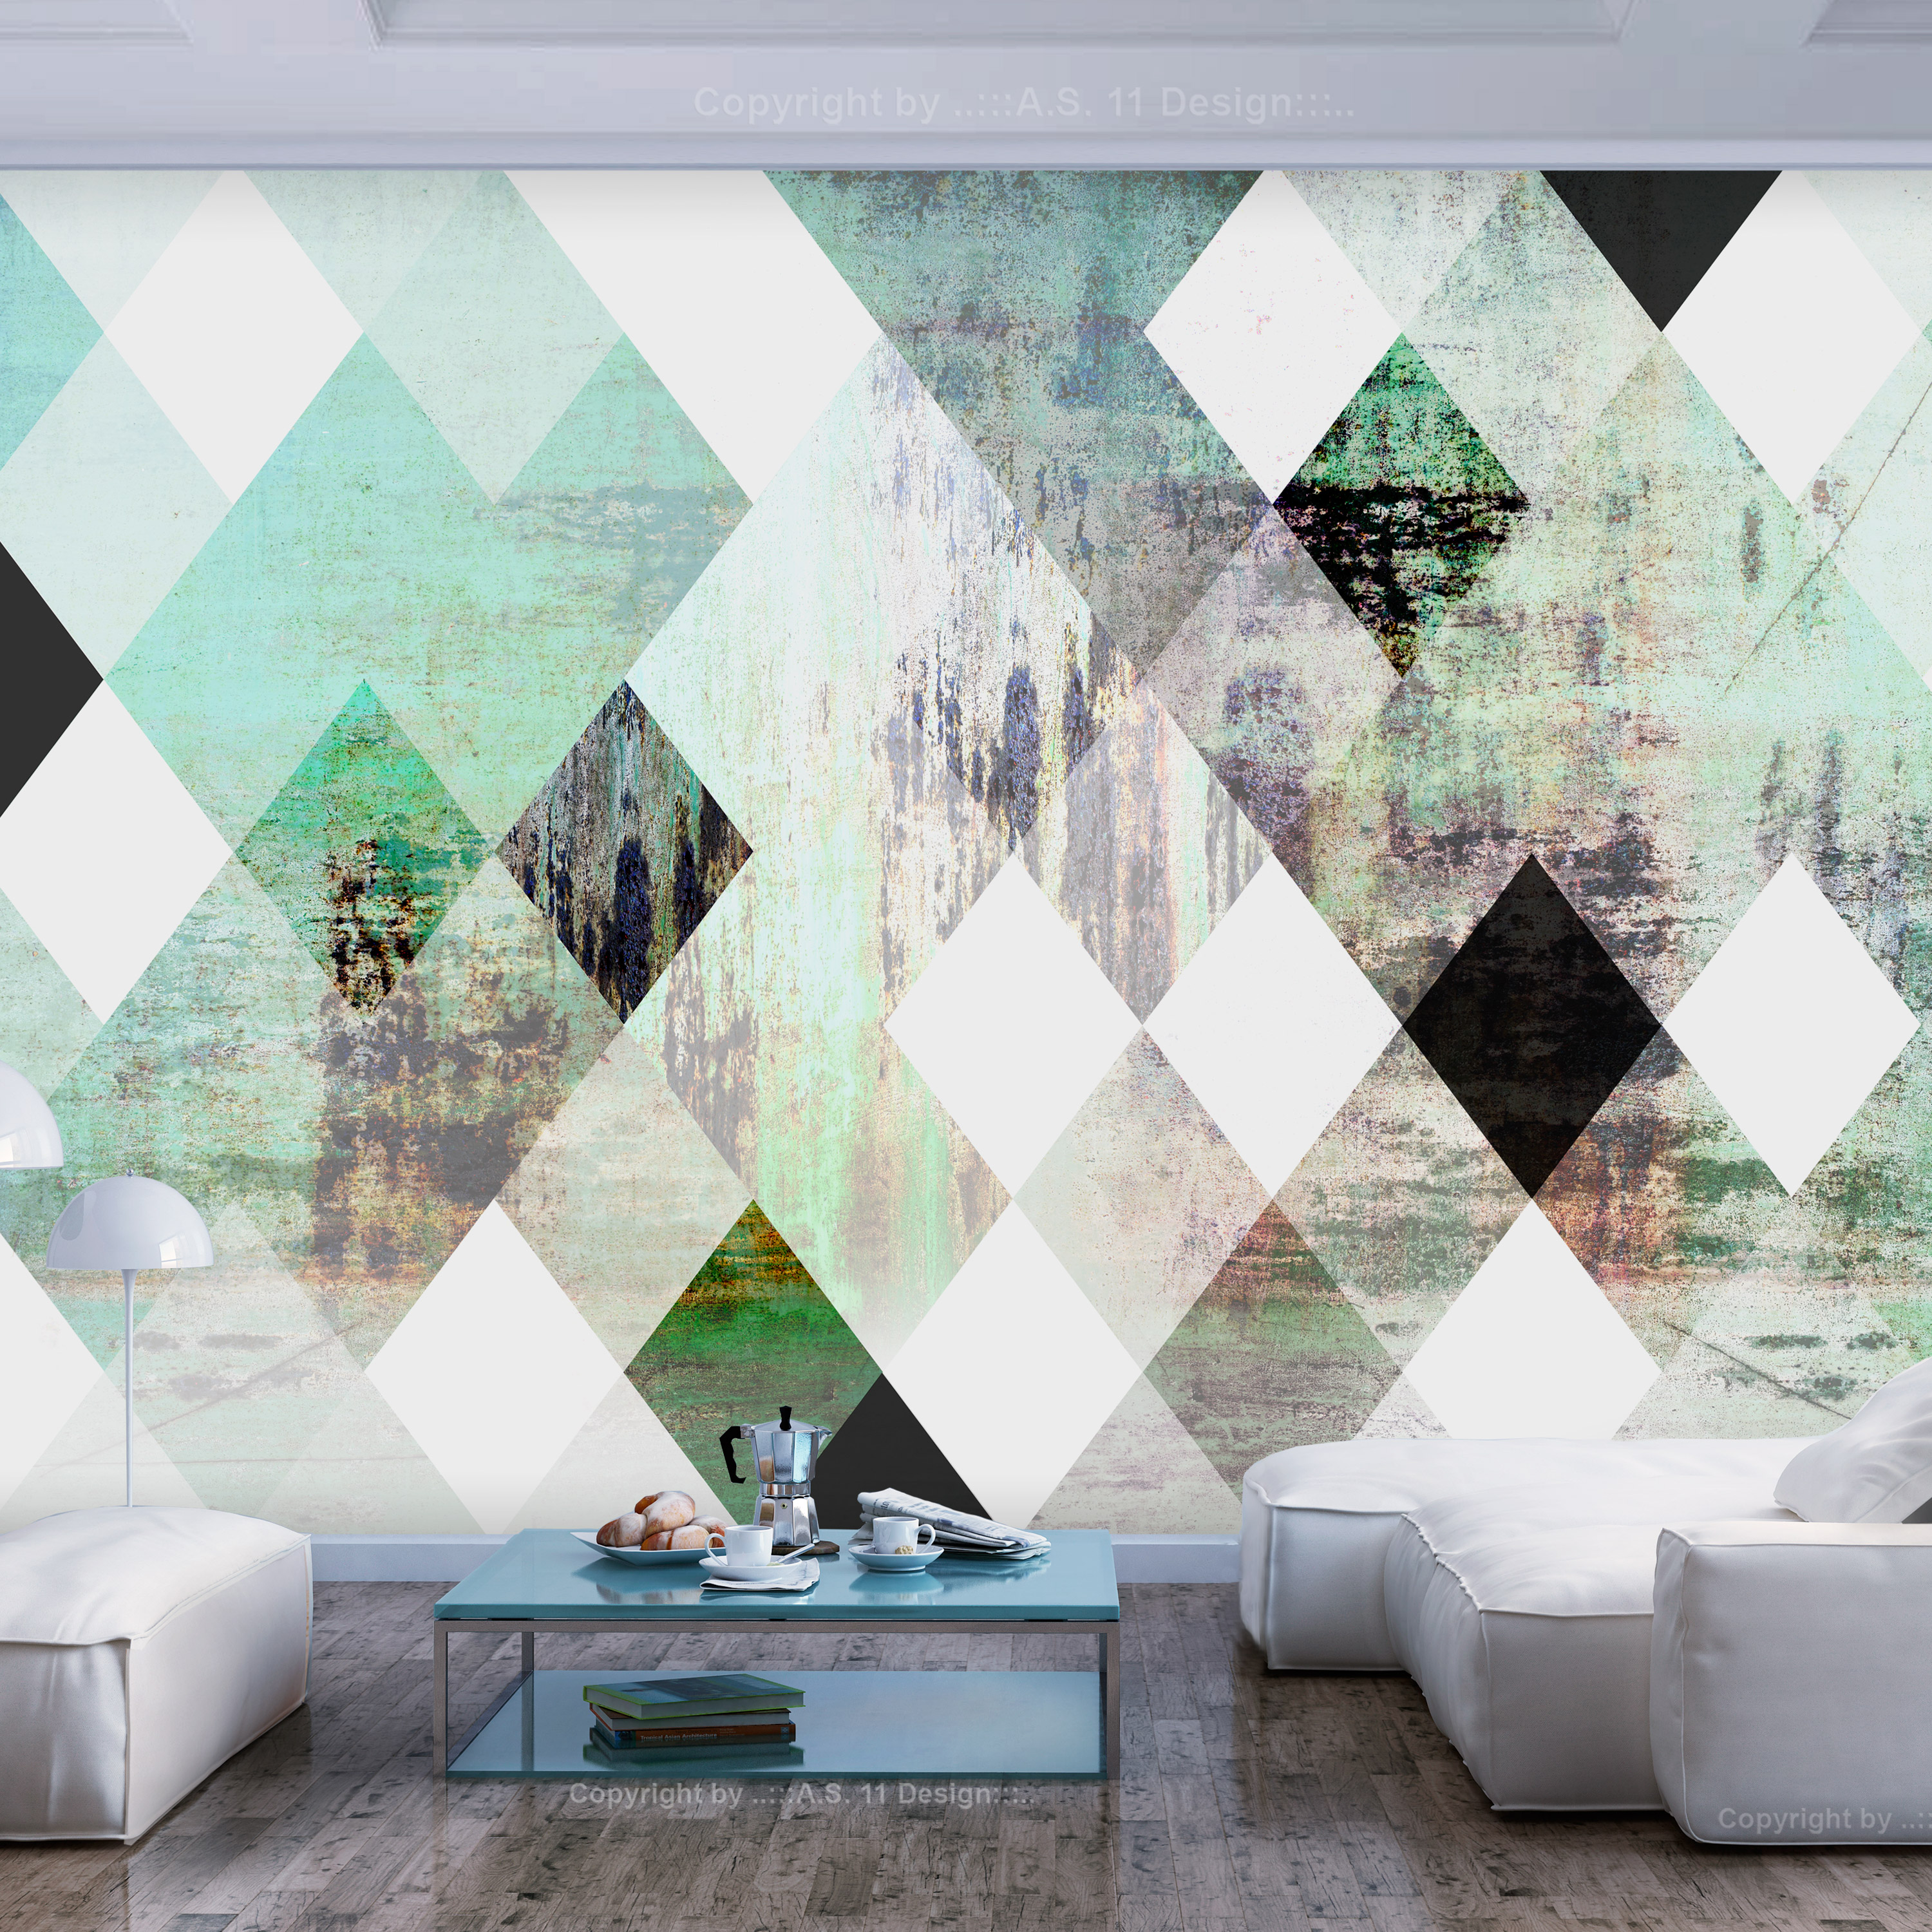 Self-adhesive Wallpaper - Rhombic Chessboard (Green) - 441x315